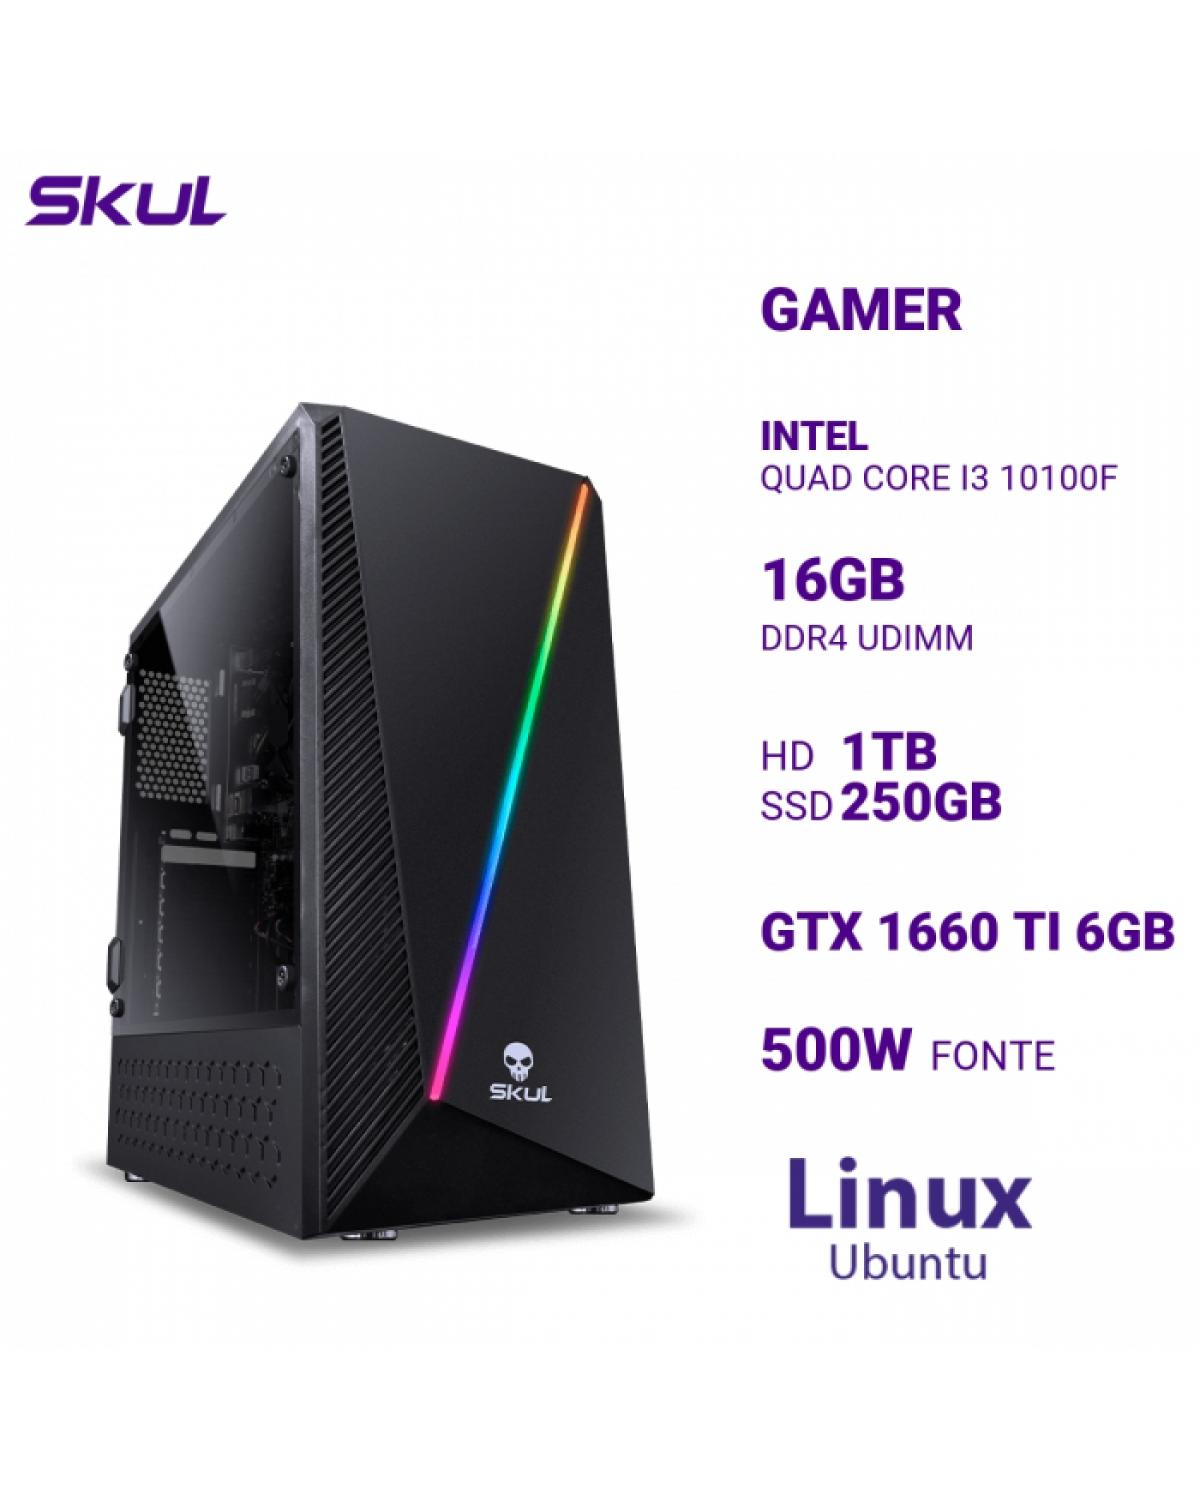 COMPUTADOR GAMER 3000 QUAD CORE I3 10100F MEM 16GB DDR4 HD 1TB SSD 250GB NVME GTX 1660 TI 6GB FONTE 500W LINUX